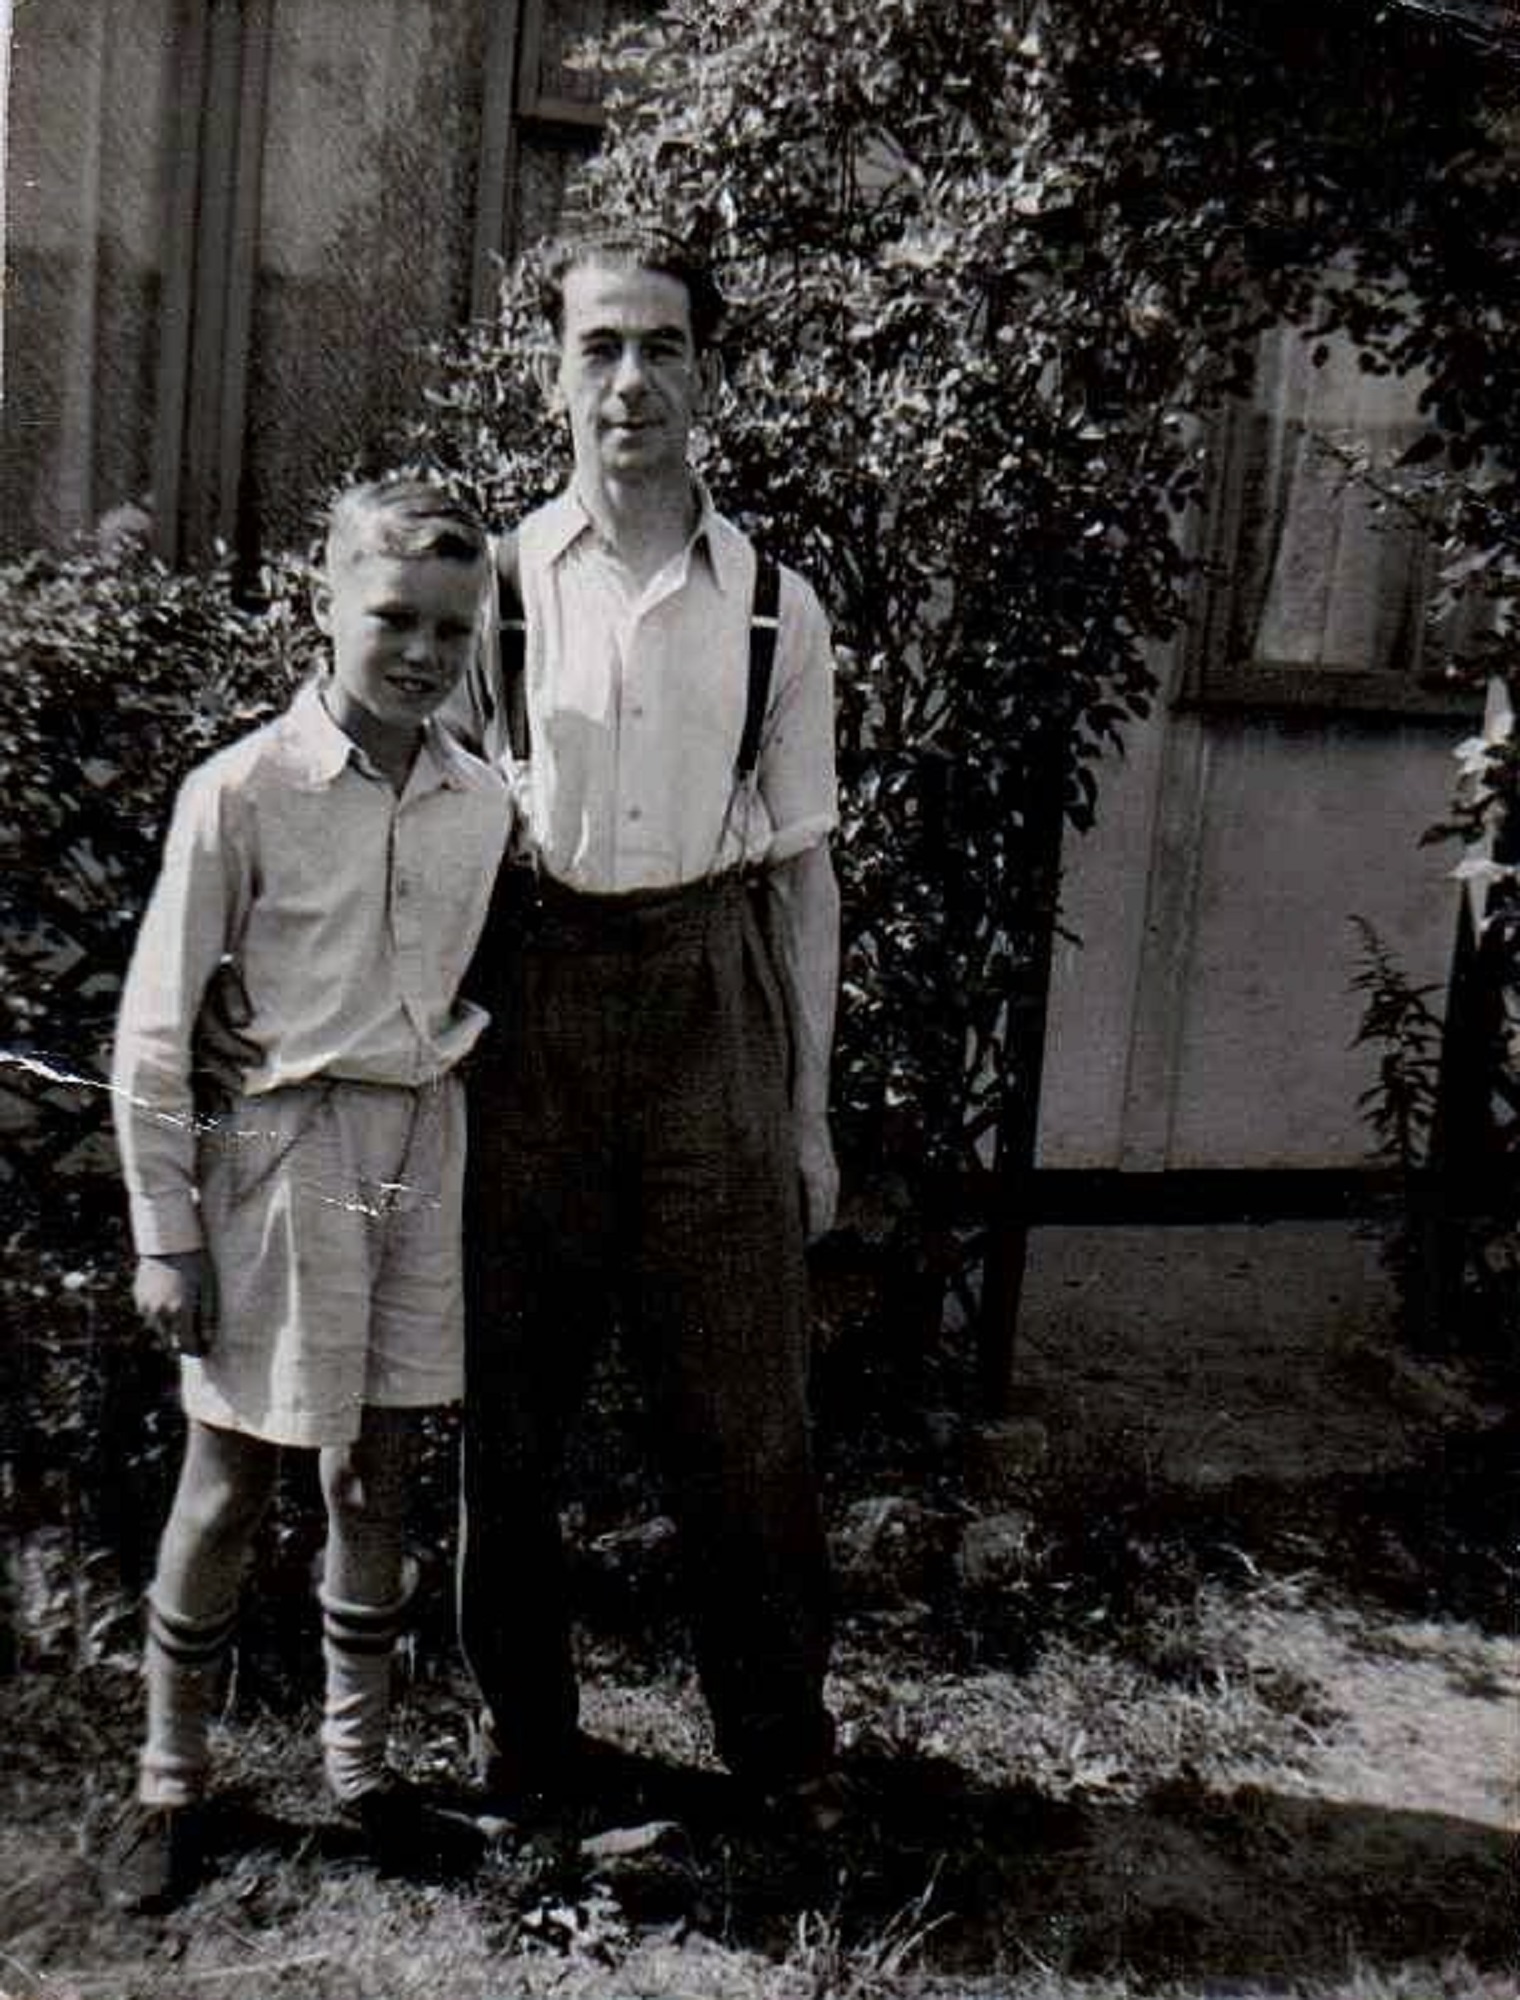 Ben with his dad in their prefab garden, Dartmouth Park Hill, London N19